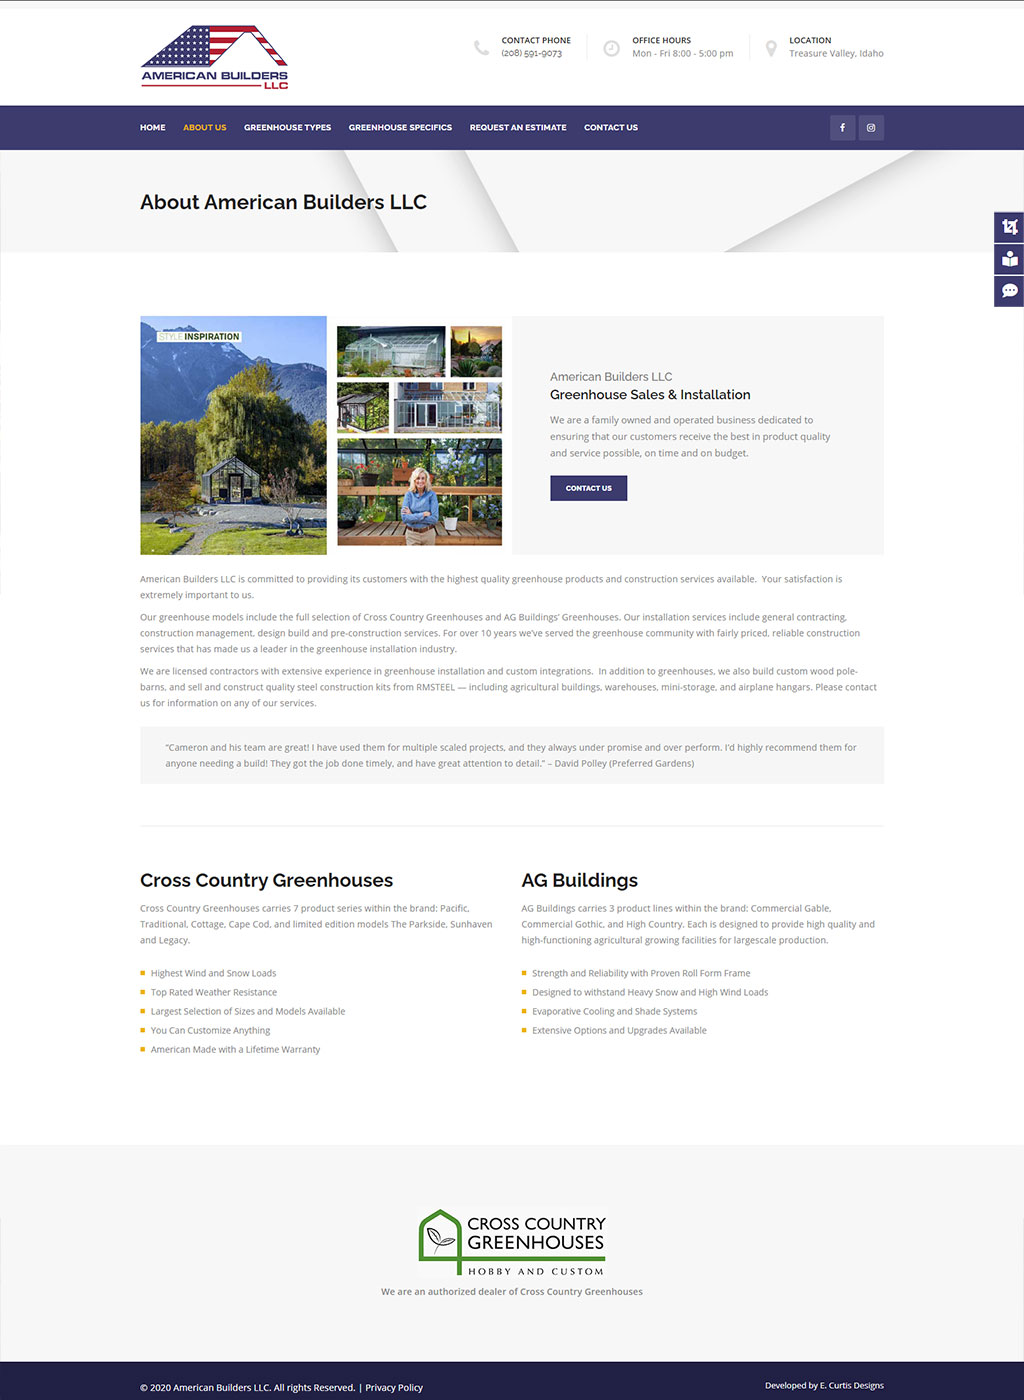 Website developed for American Builders LLC